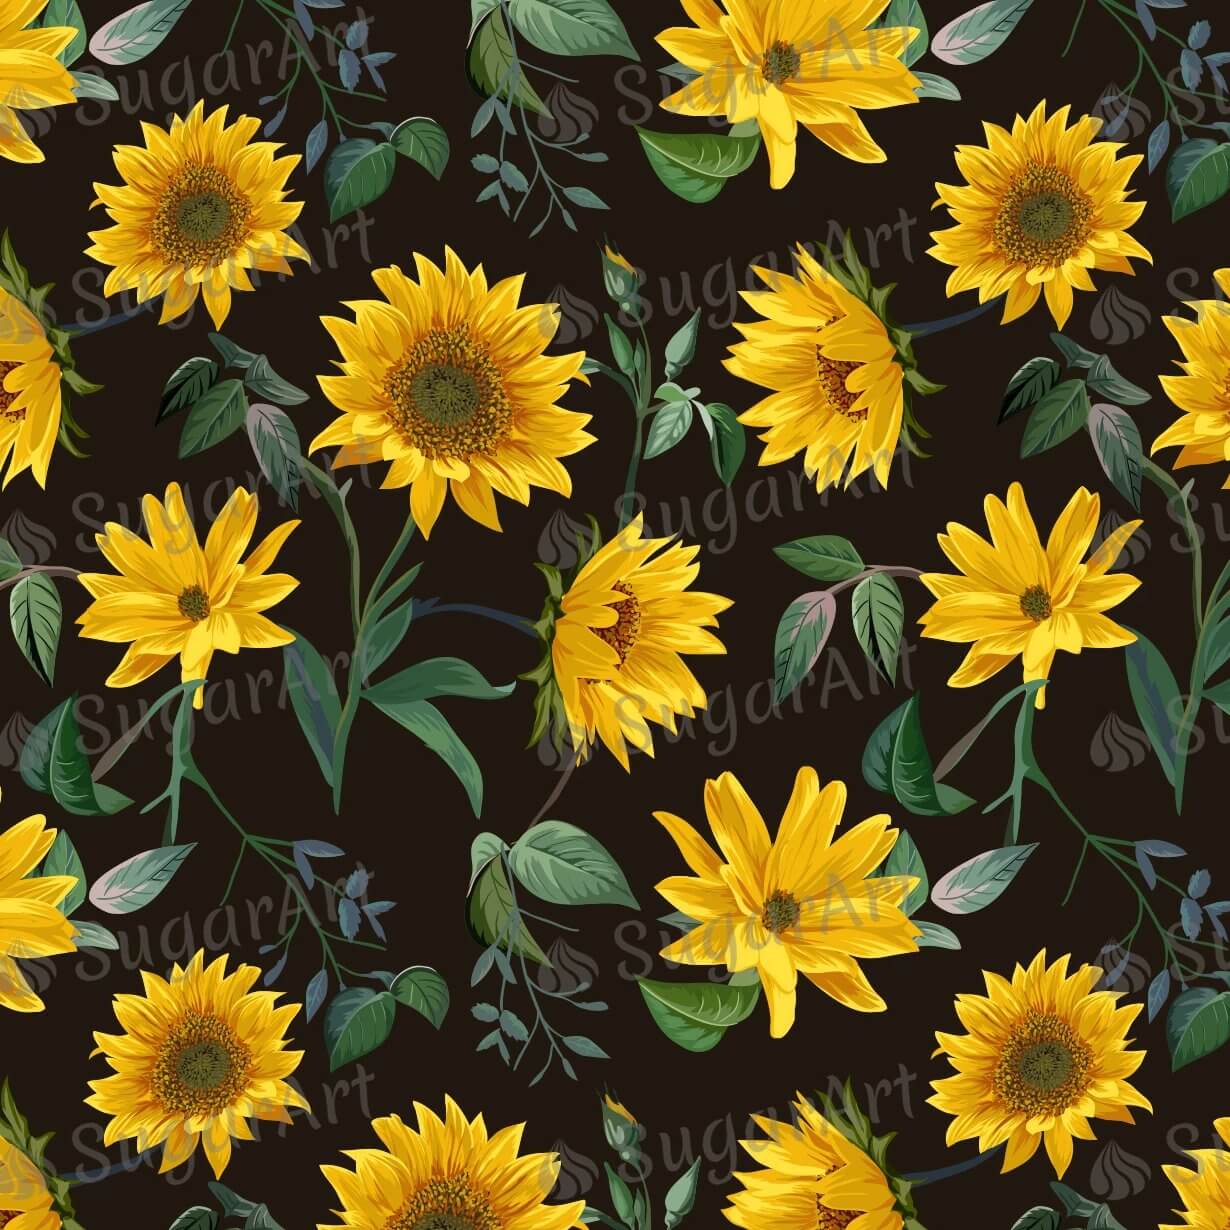 Sunflowers - BSA070.